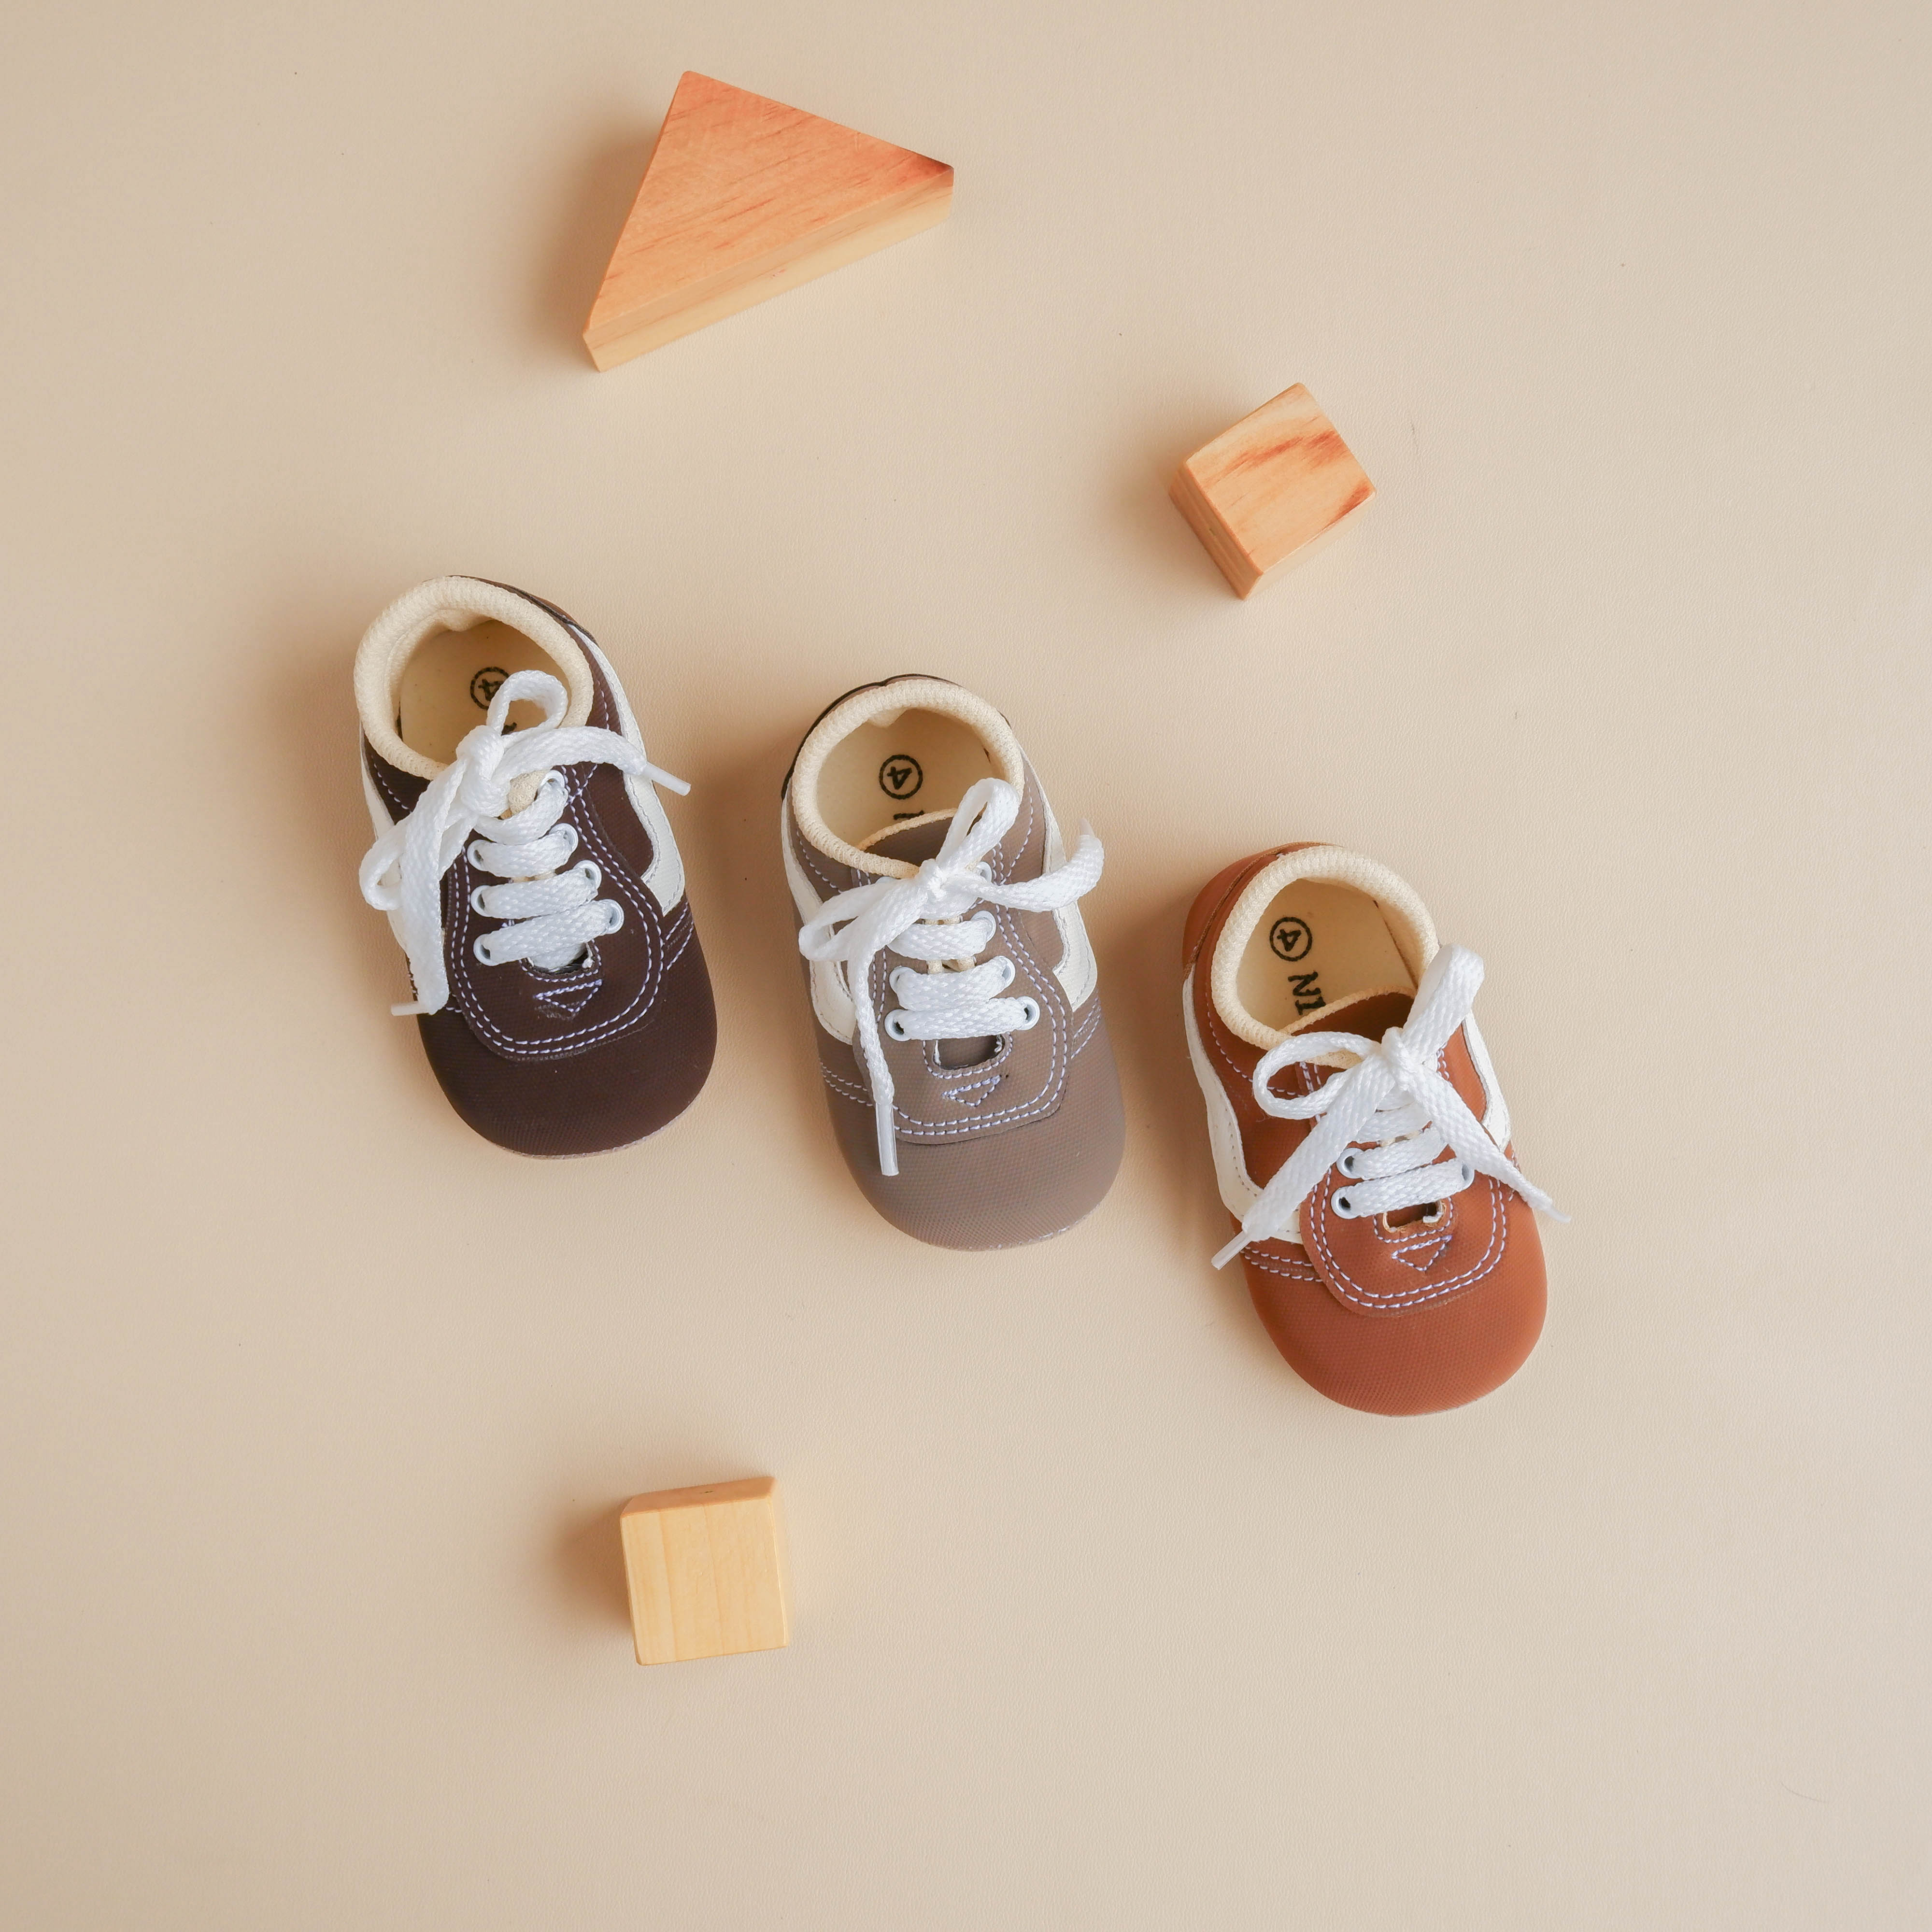 Leo Baby Shoes (sepatu prewalker Bayi)